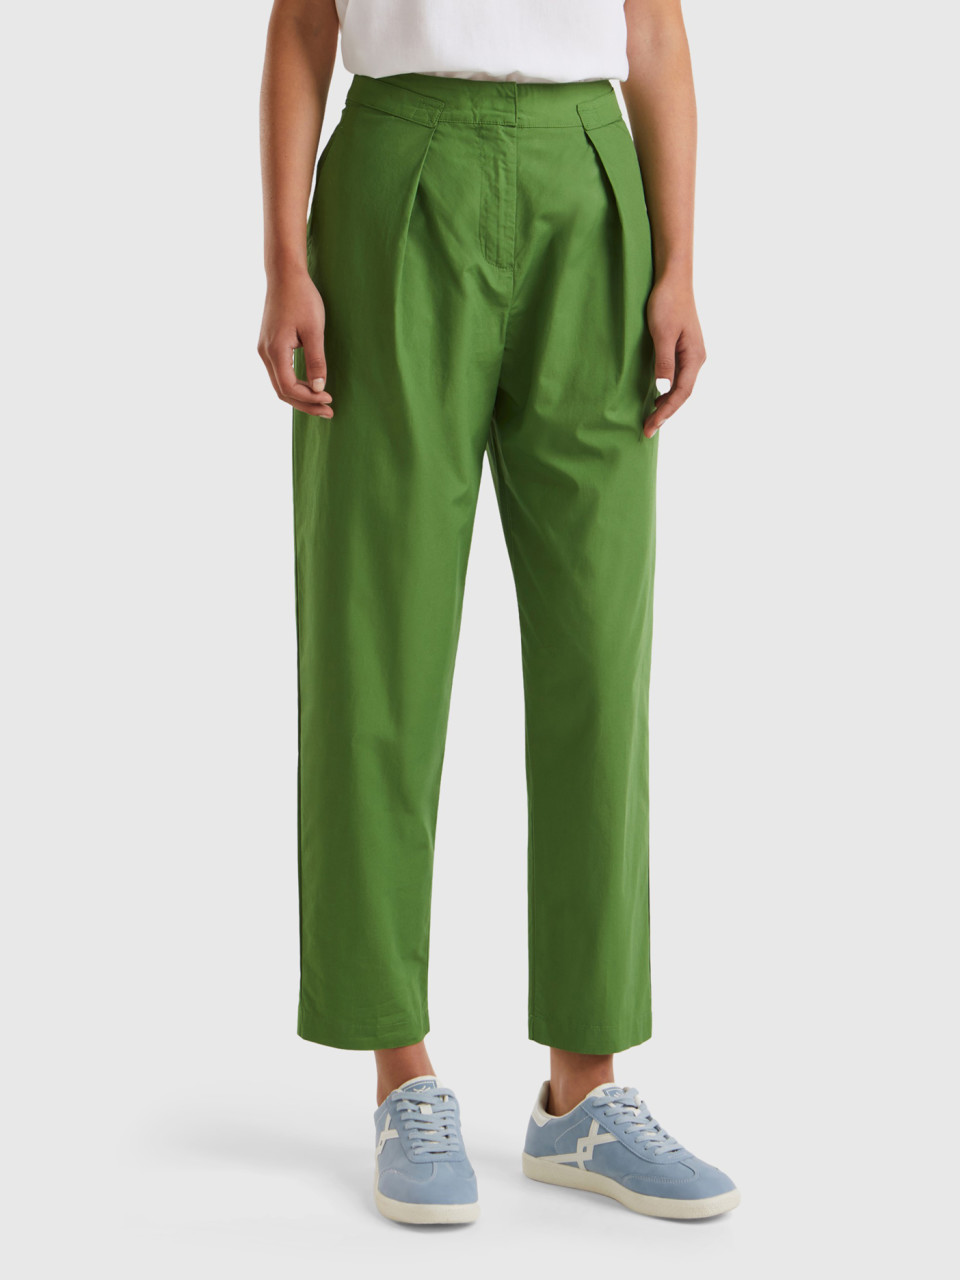 Benetton, Denim Trousers In Lightweight Cotton, Military Green, Women